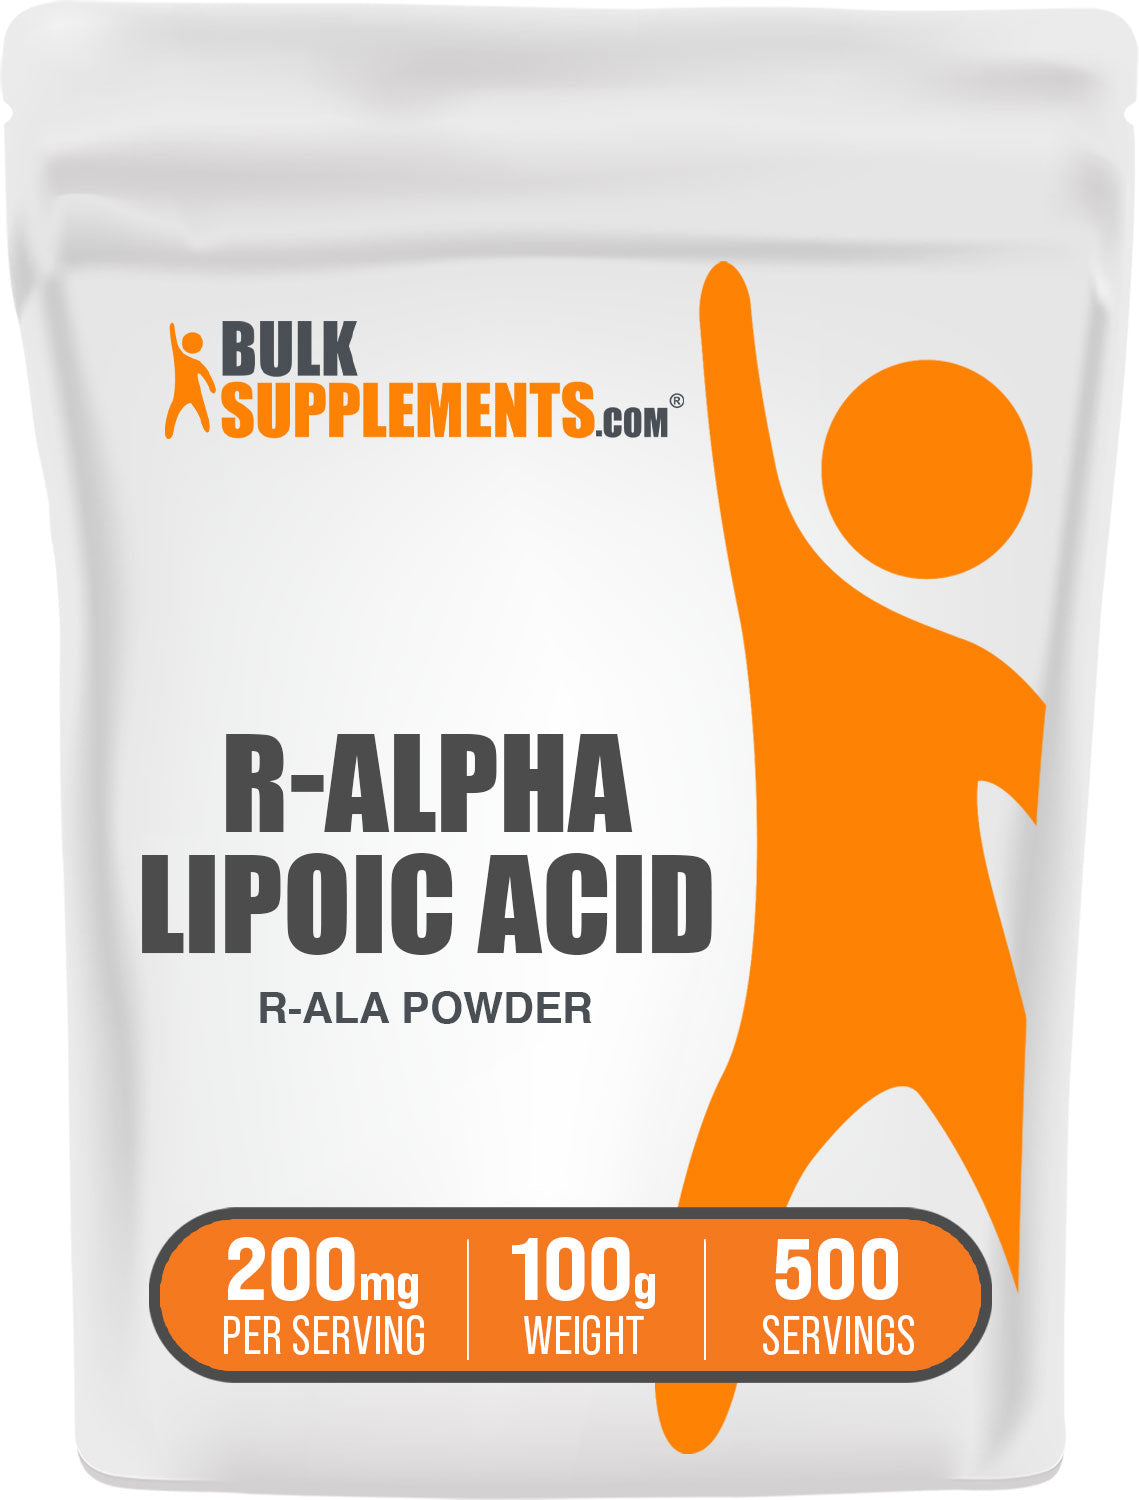 BulkSupplements R-Alpha Lipoic Acid Powder R-ALA 100g bag